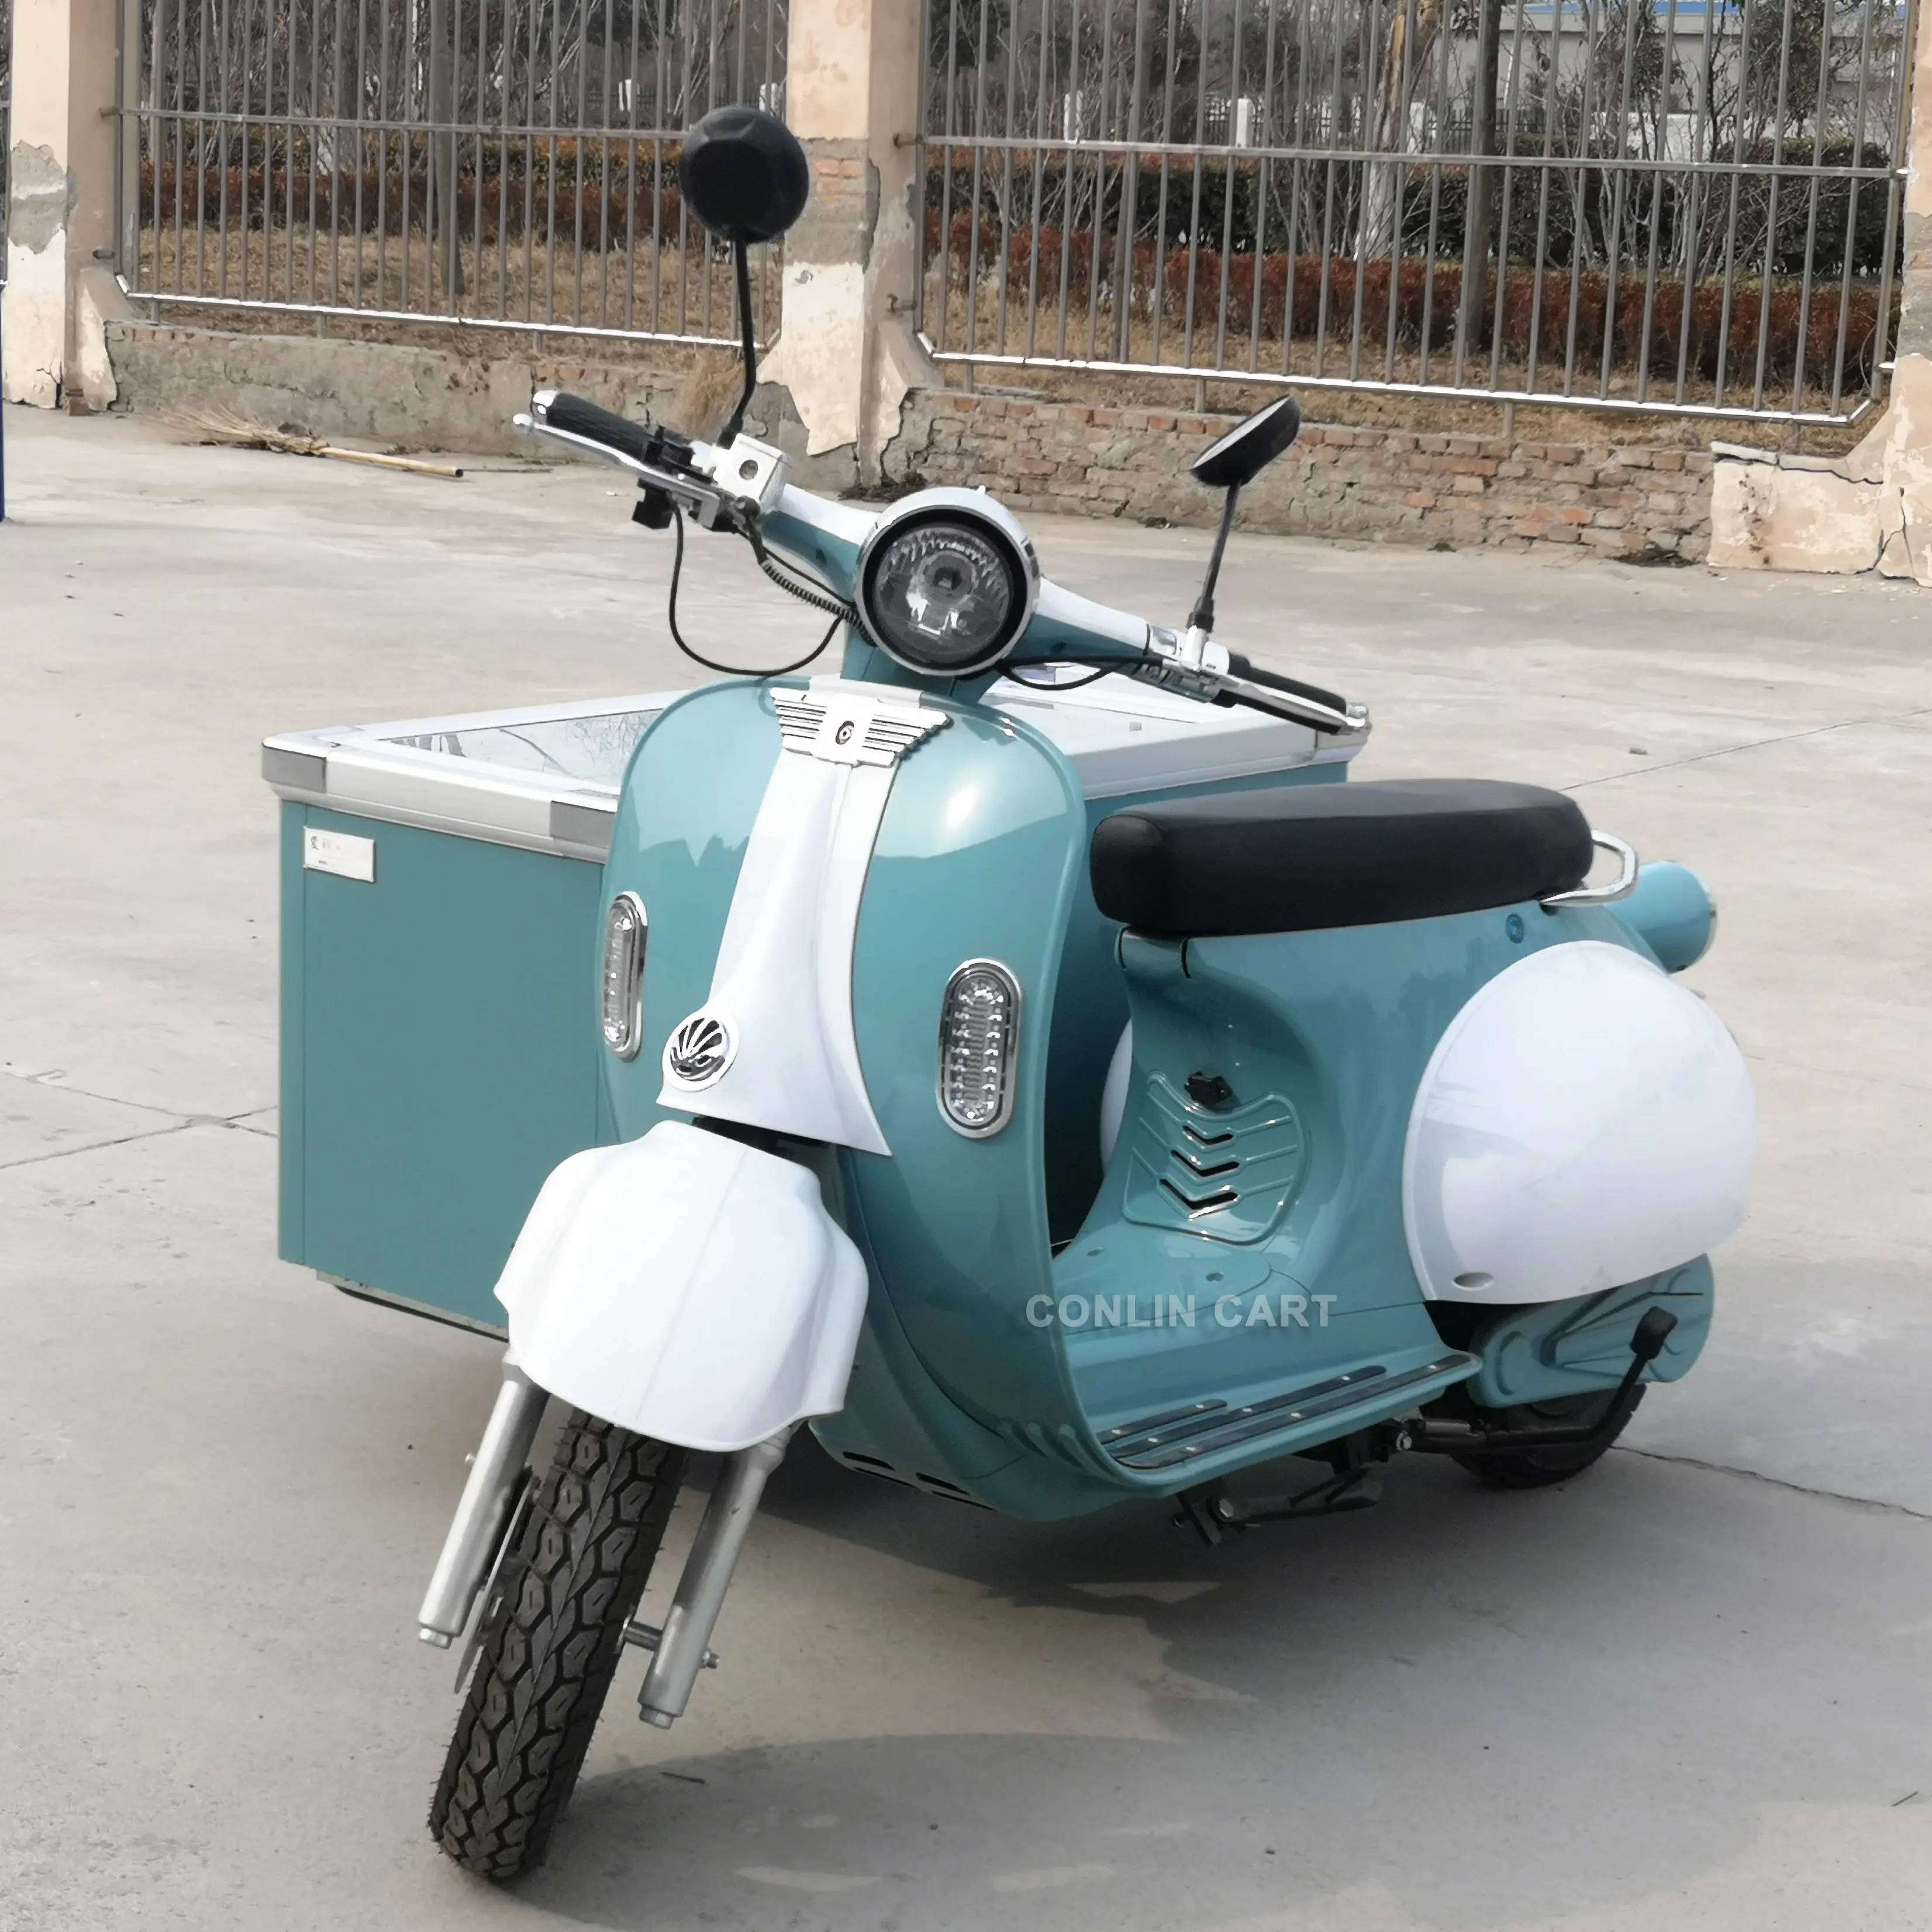 Sidecar-carrito eléctrico de helado para motocicleta, con congelador, oferta, 2021